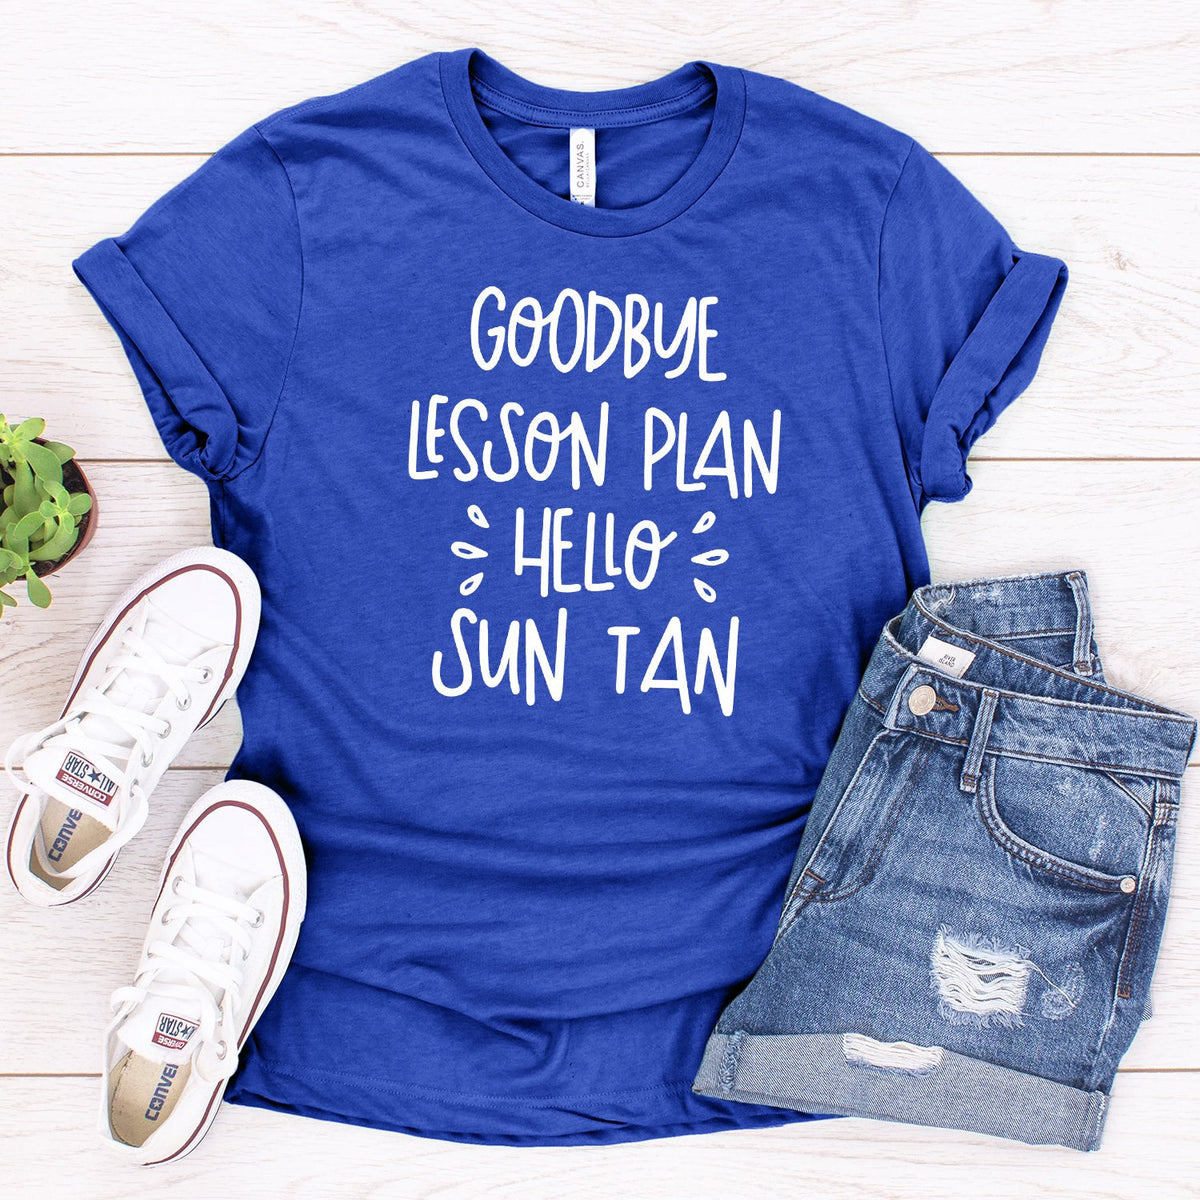 Goodbye Lesson Plan Hello Sun Tan - Short Sleeve Tee Shirt